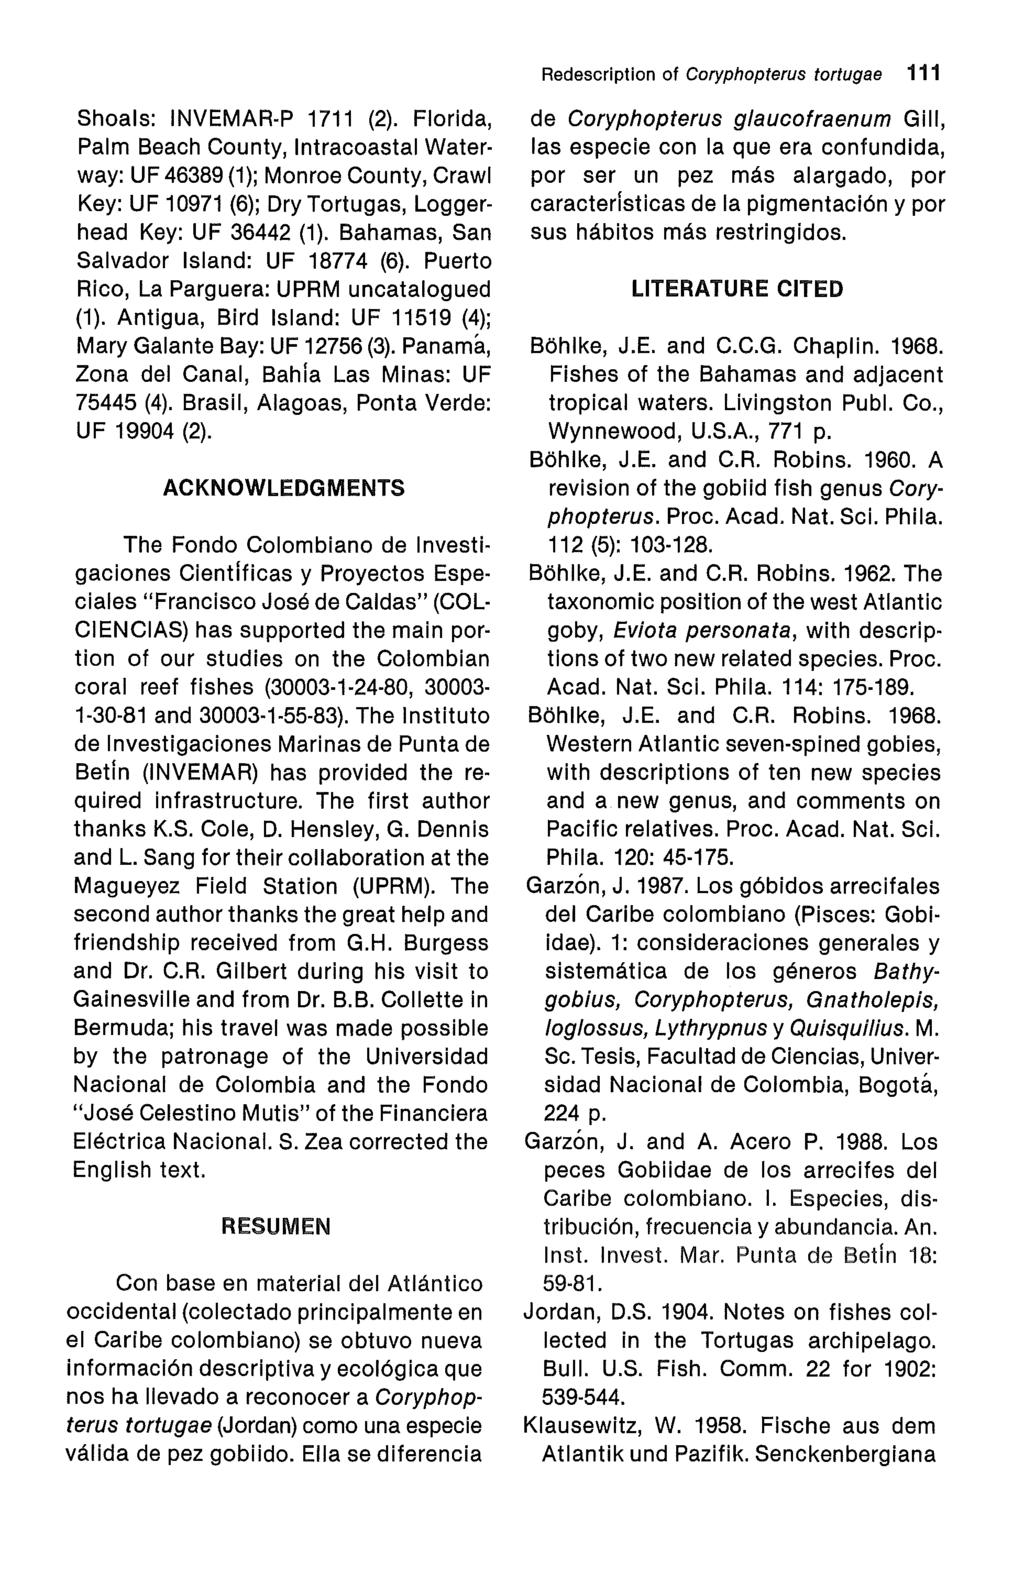 Garzón-Ferreira and Acero P.: Redescription of Coryphopterus tortugae (Jordan) (Osteichthyes: G Redescription of Coryphopterus tortugae 111 Shoals: INVEMAR-P 1711 (2).